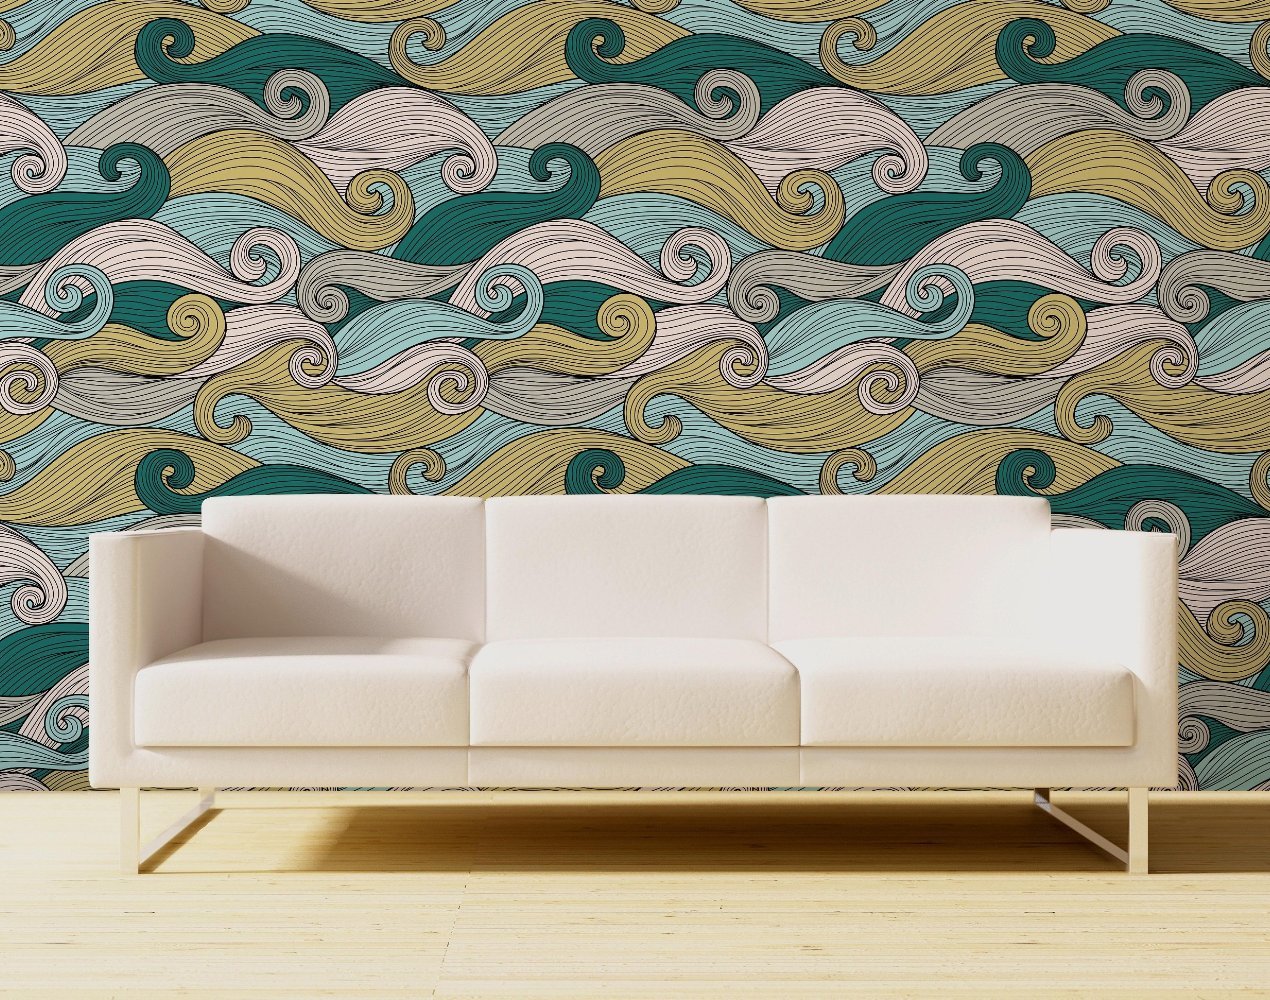 attitude wallpaper,wallpaper,wall,couch,furniture,pattern